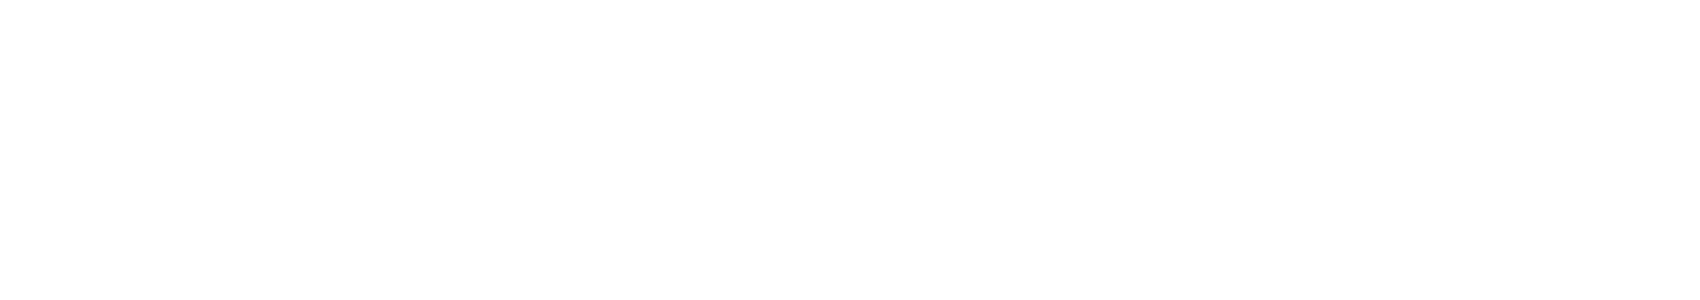 Codexcode Logo